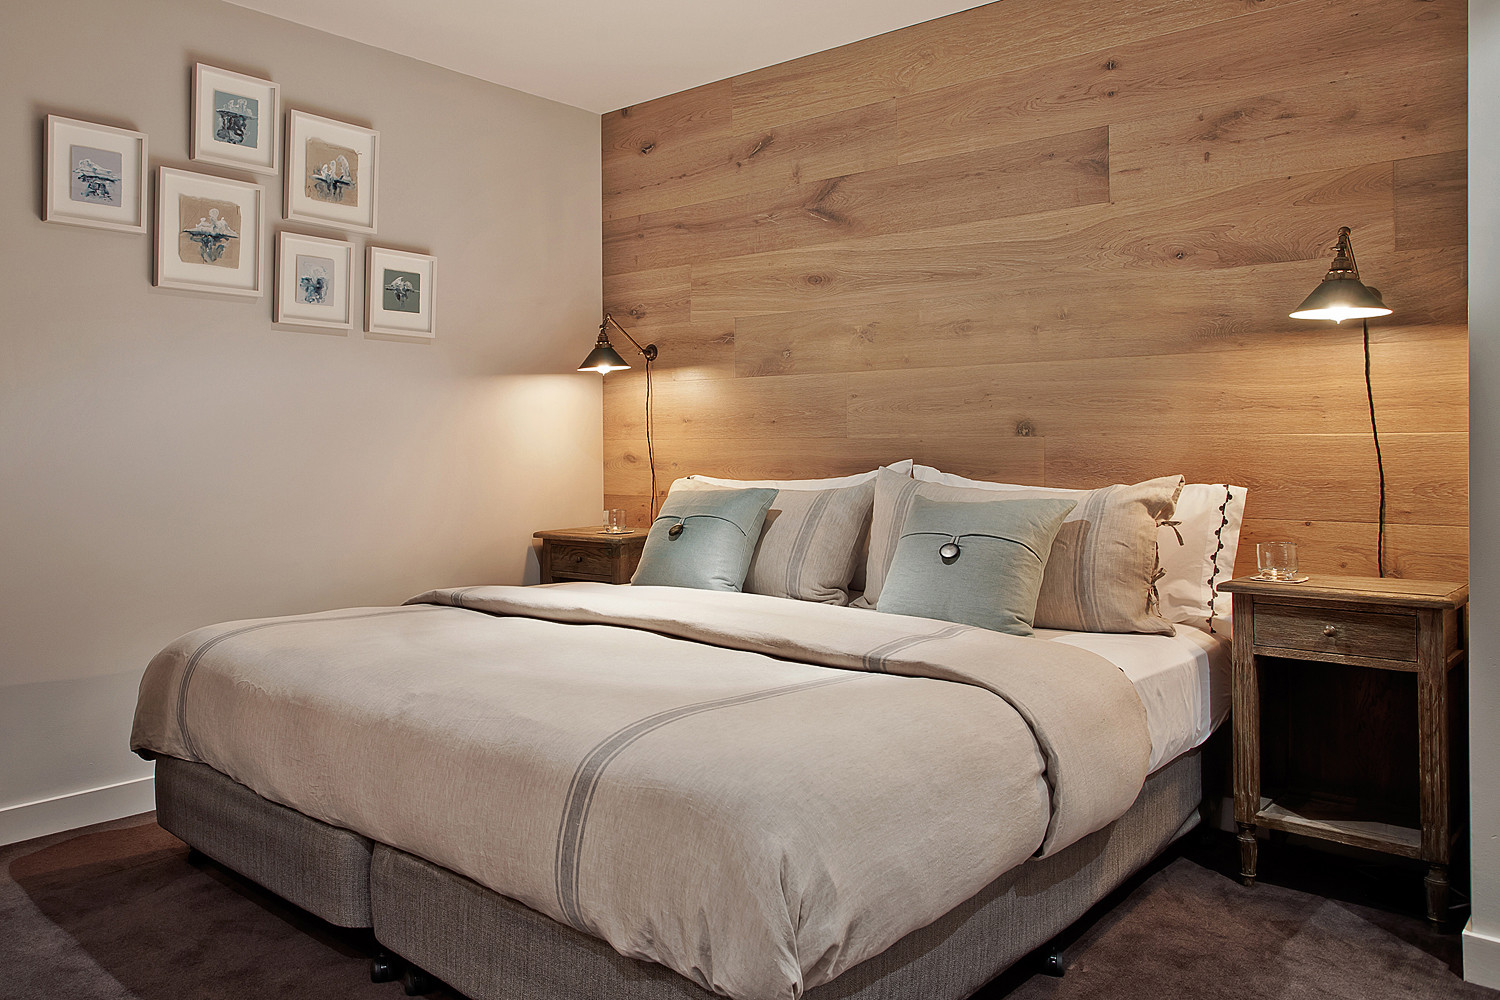 Wall Mount Bedroom Light
 Bedside wall lights Enhance Your Bedroom Decor